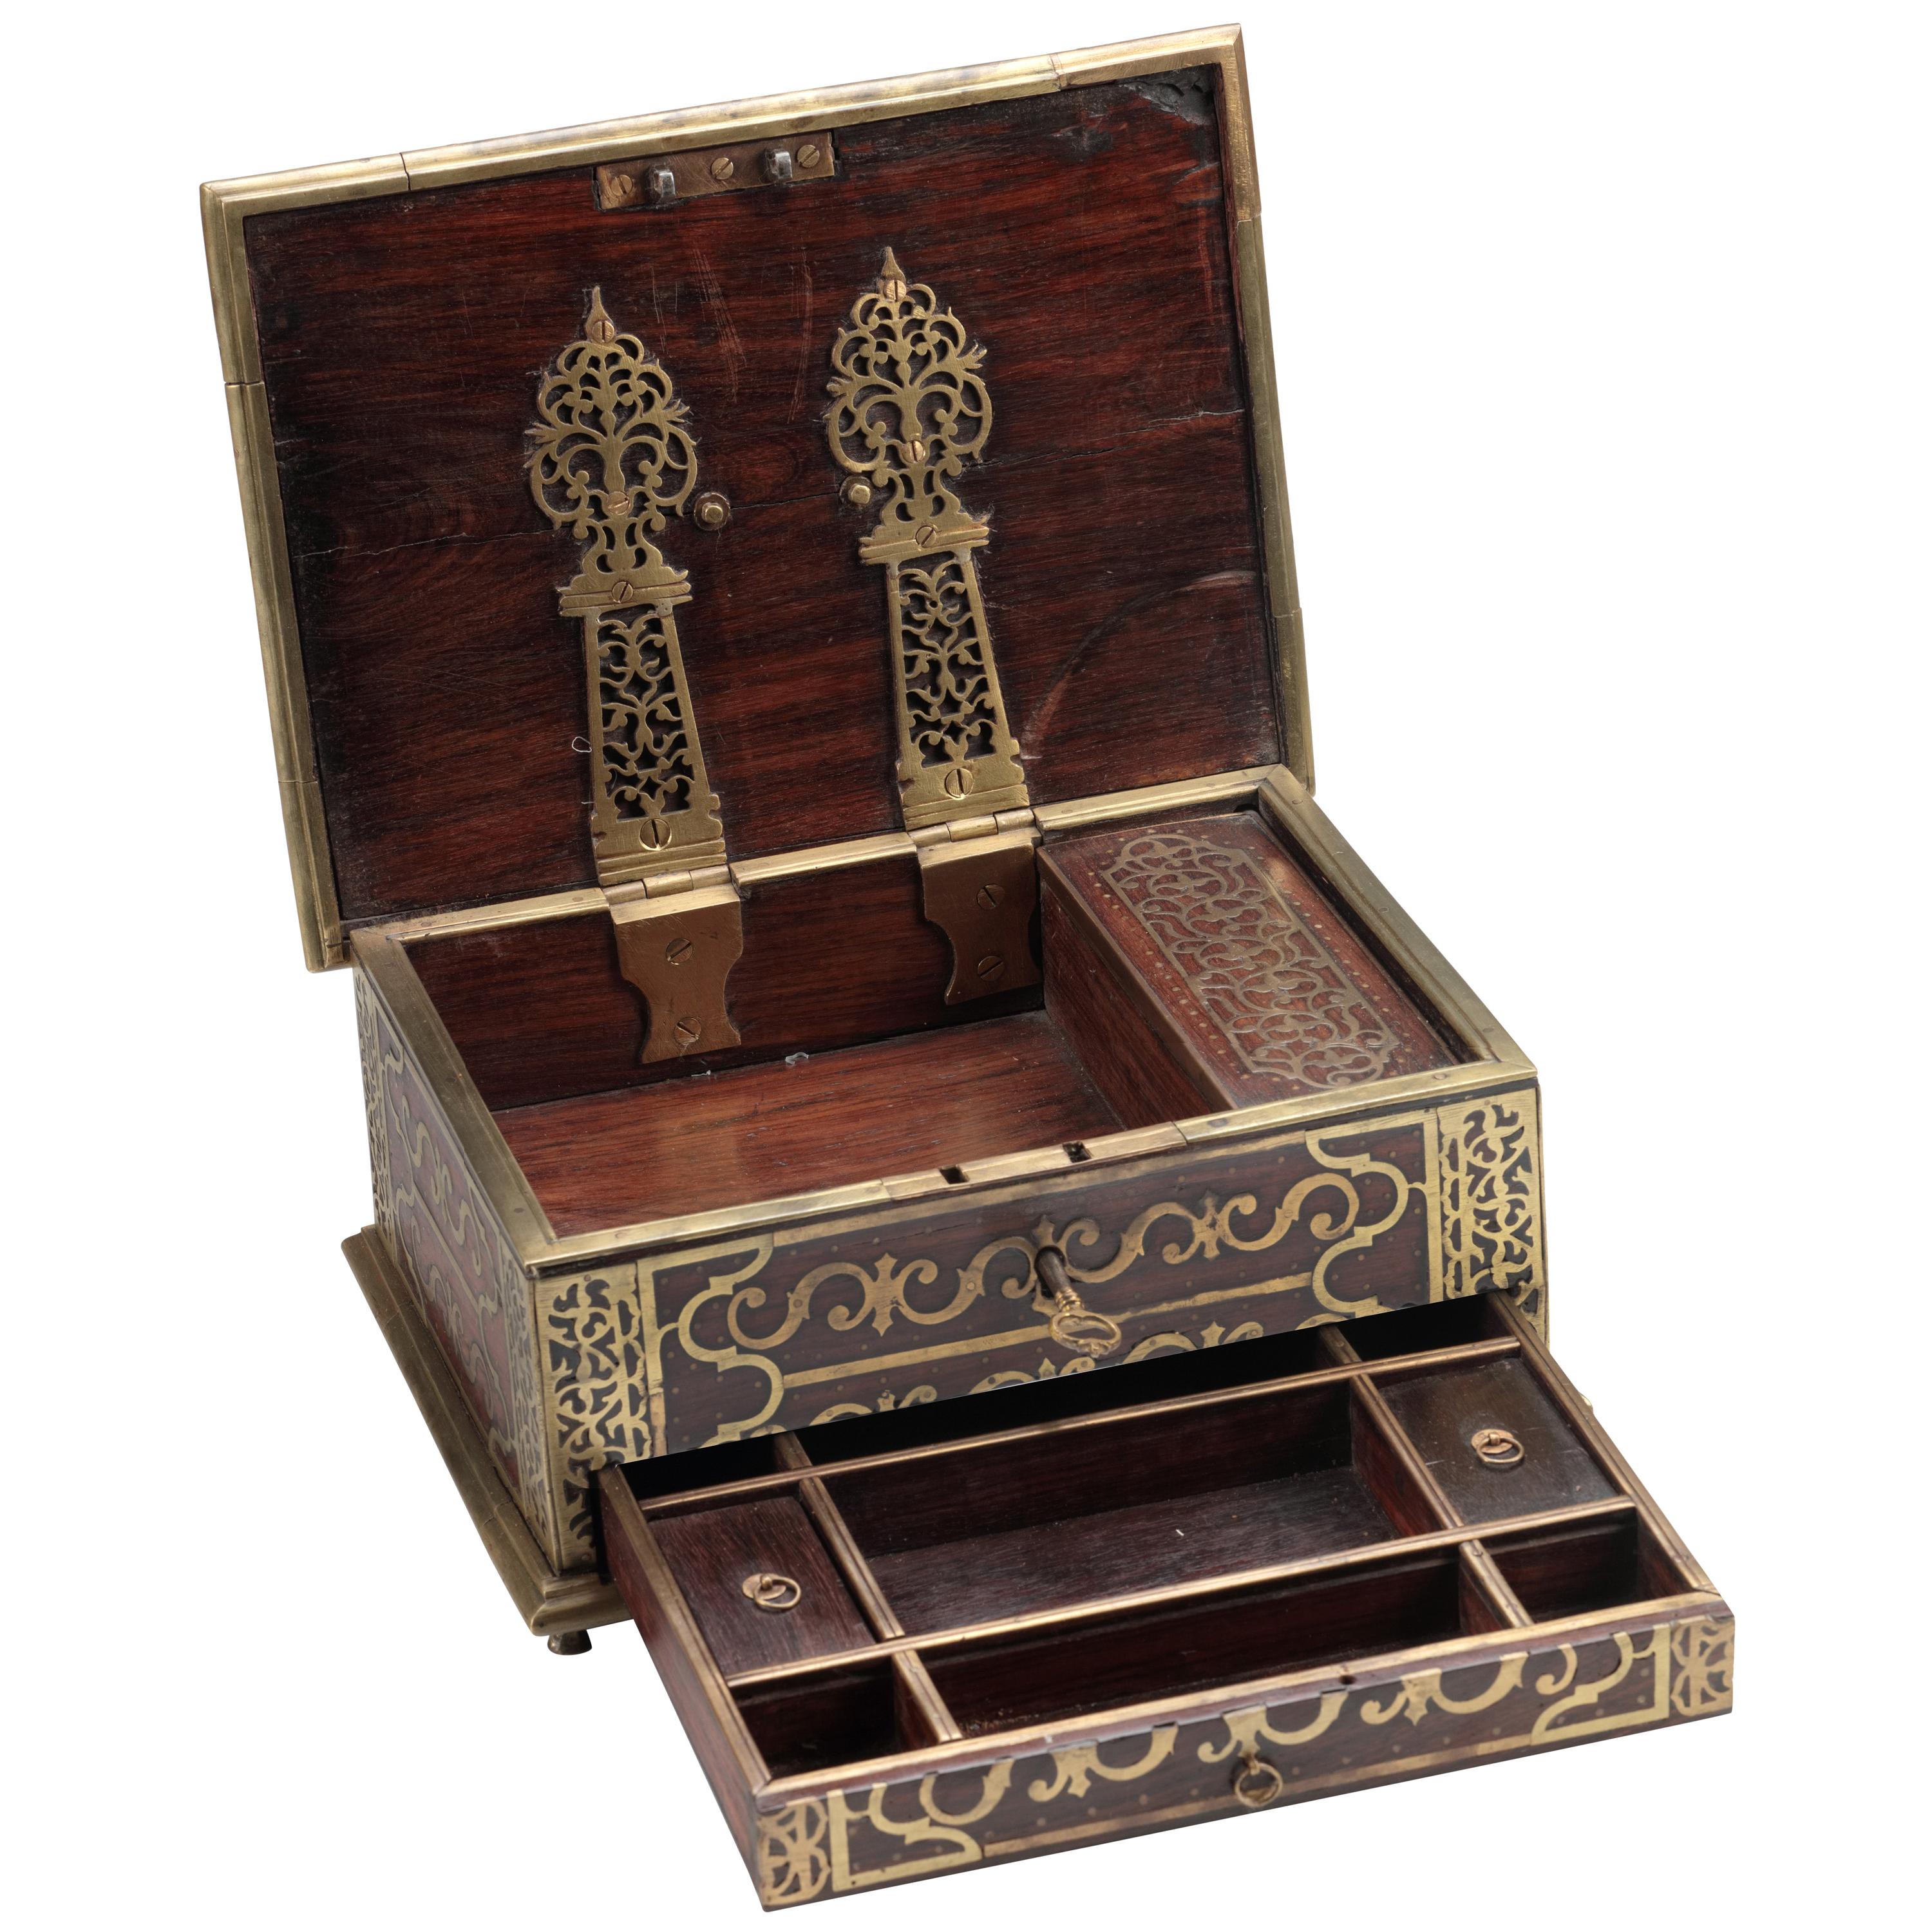 Colonial Islamic Arabian Market Jewelry Box, 18th Century, India/Malabar Coast